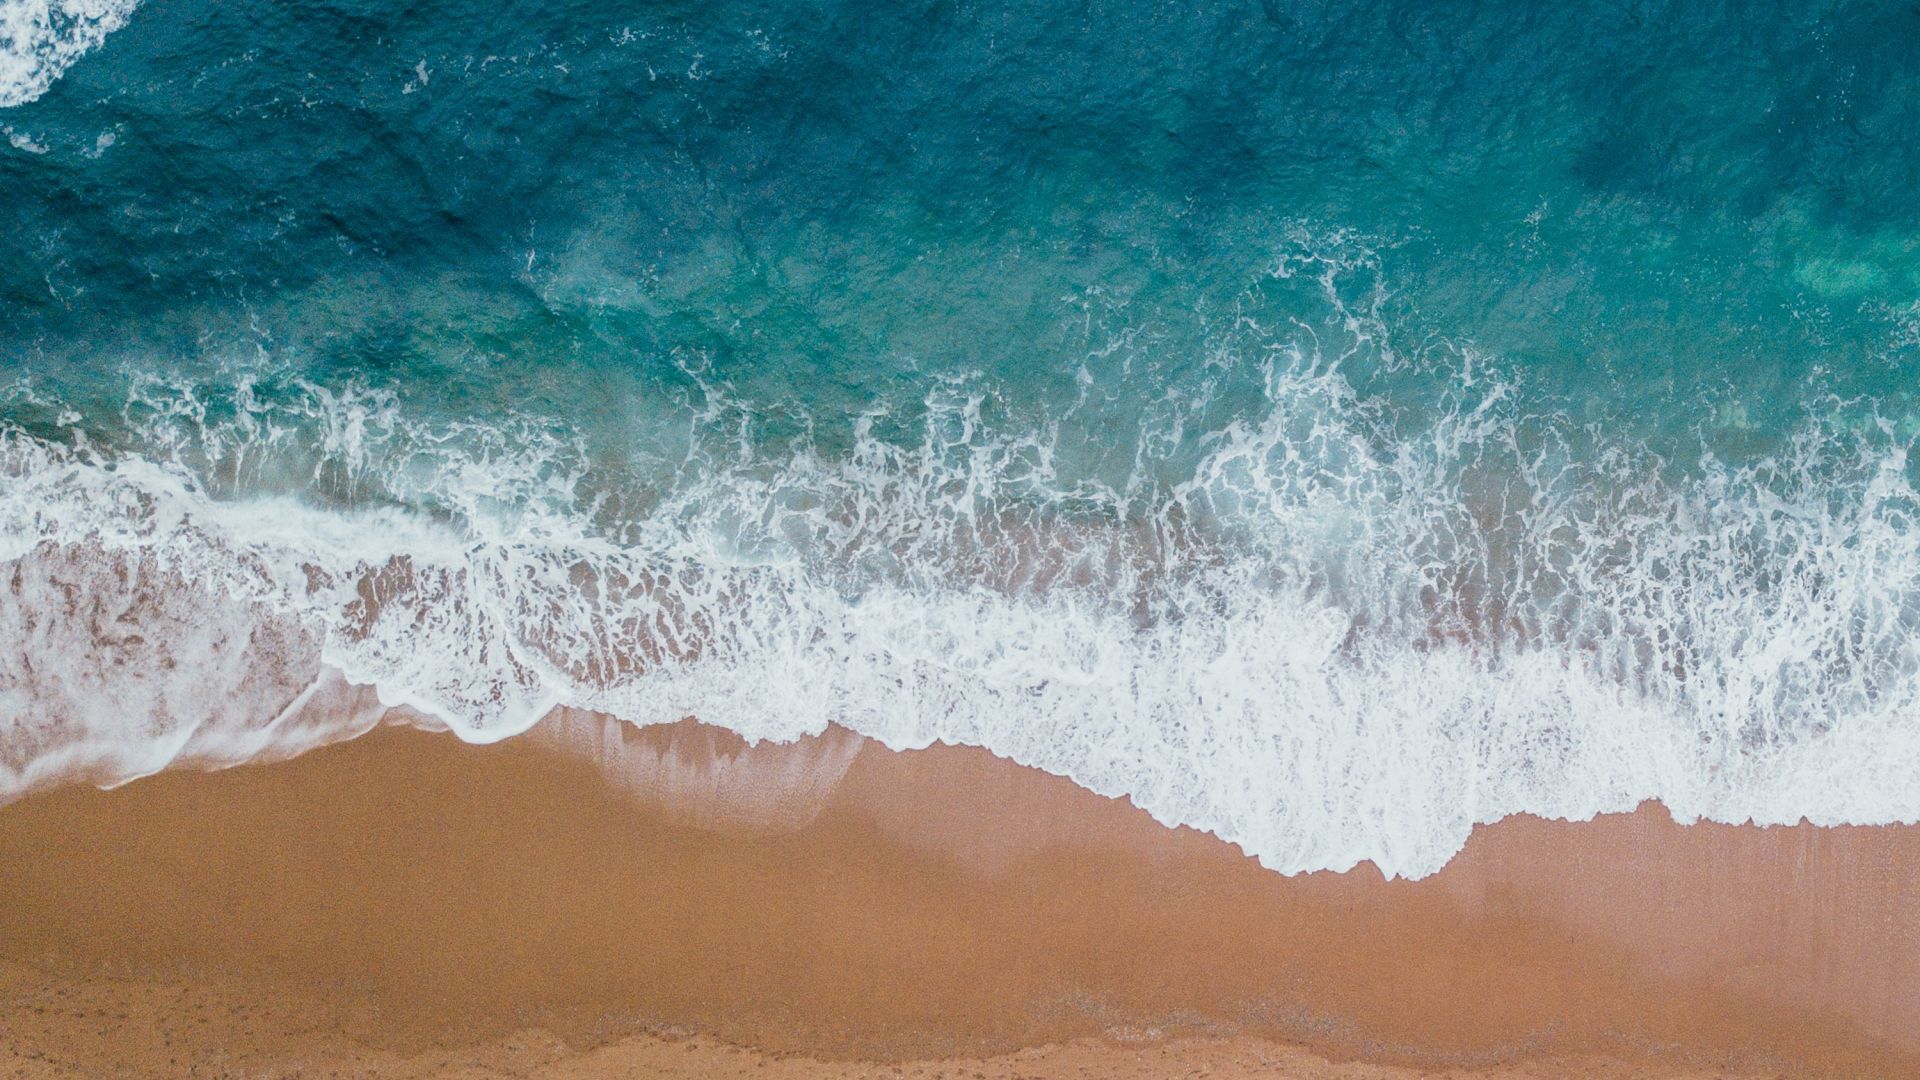 Desktop Wallpaper The Waves Beach Aerial View Blue Sea Hd Image | My ...